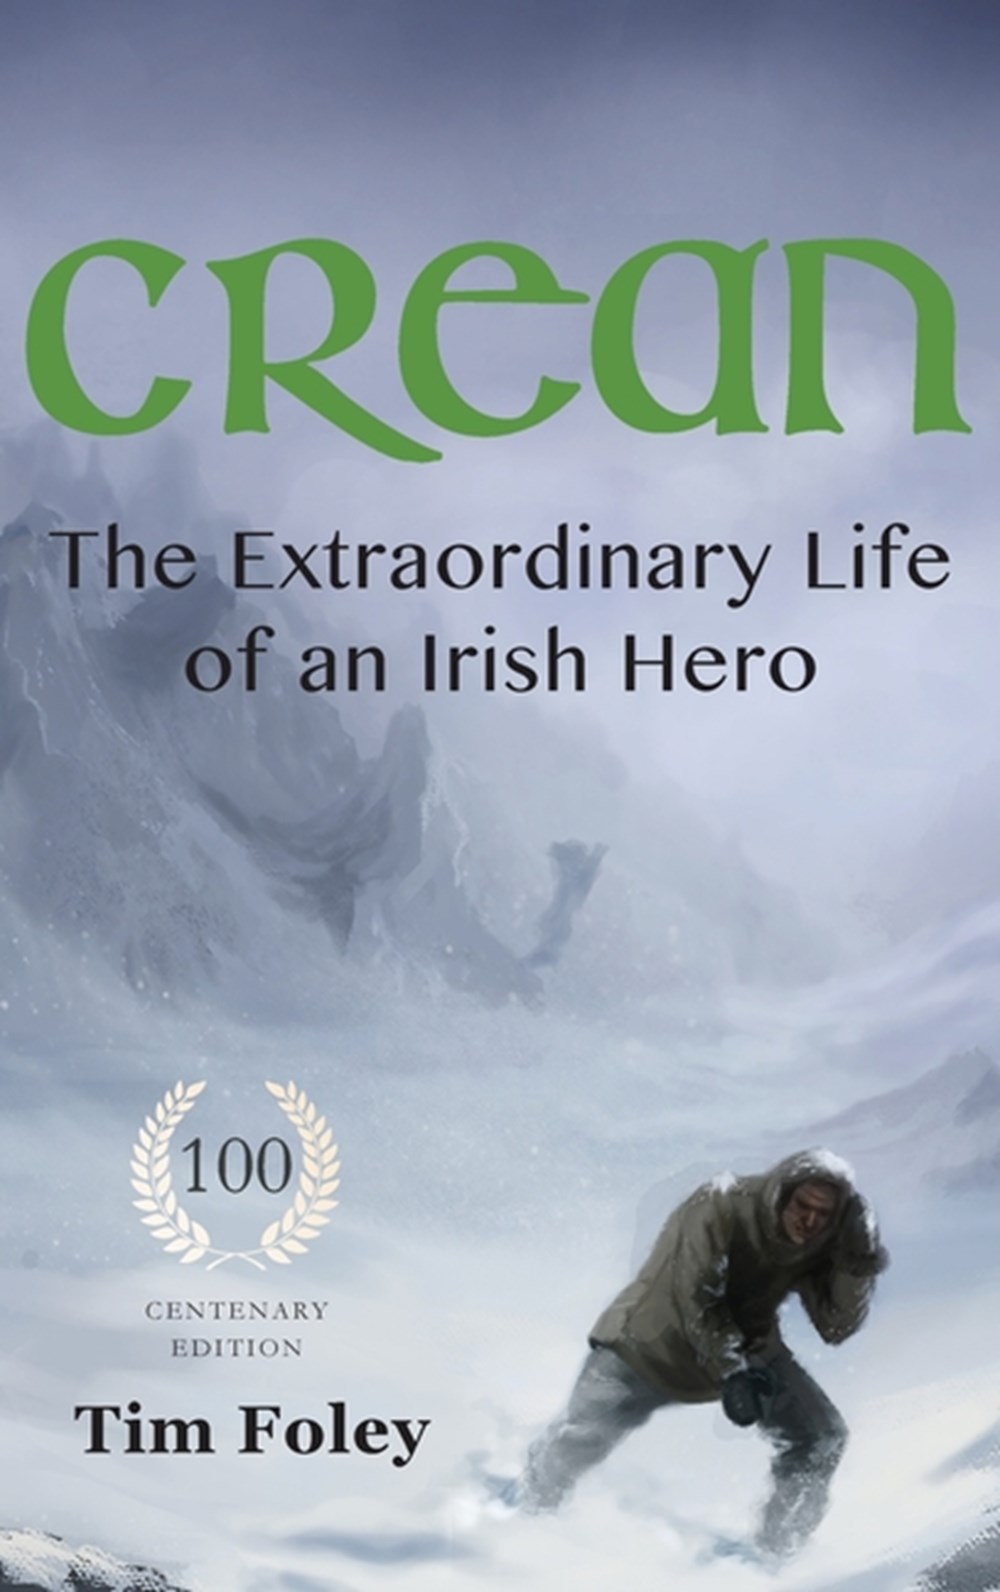 Crean - The Extraordinary Life of an Irish Hero (Second Centenary Version Hardback)